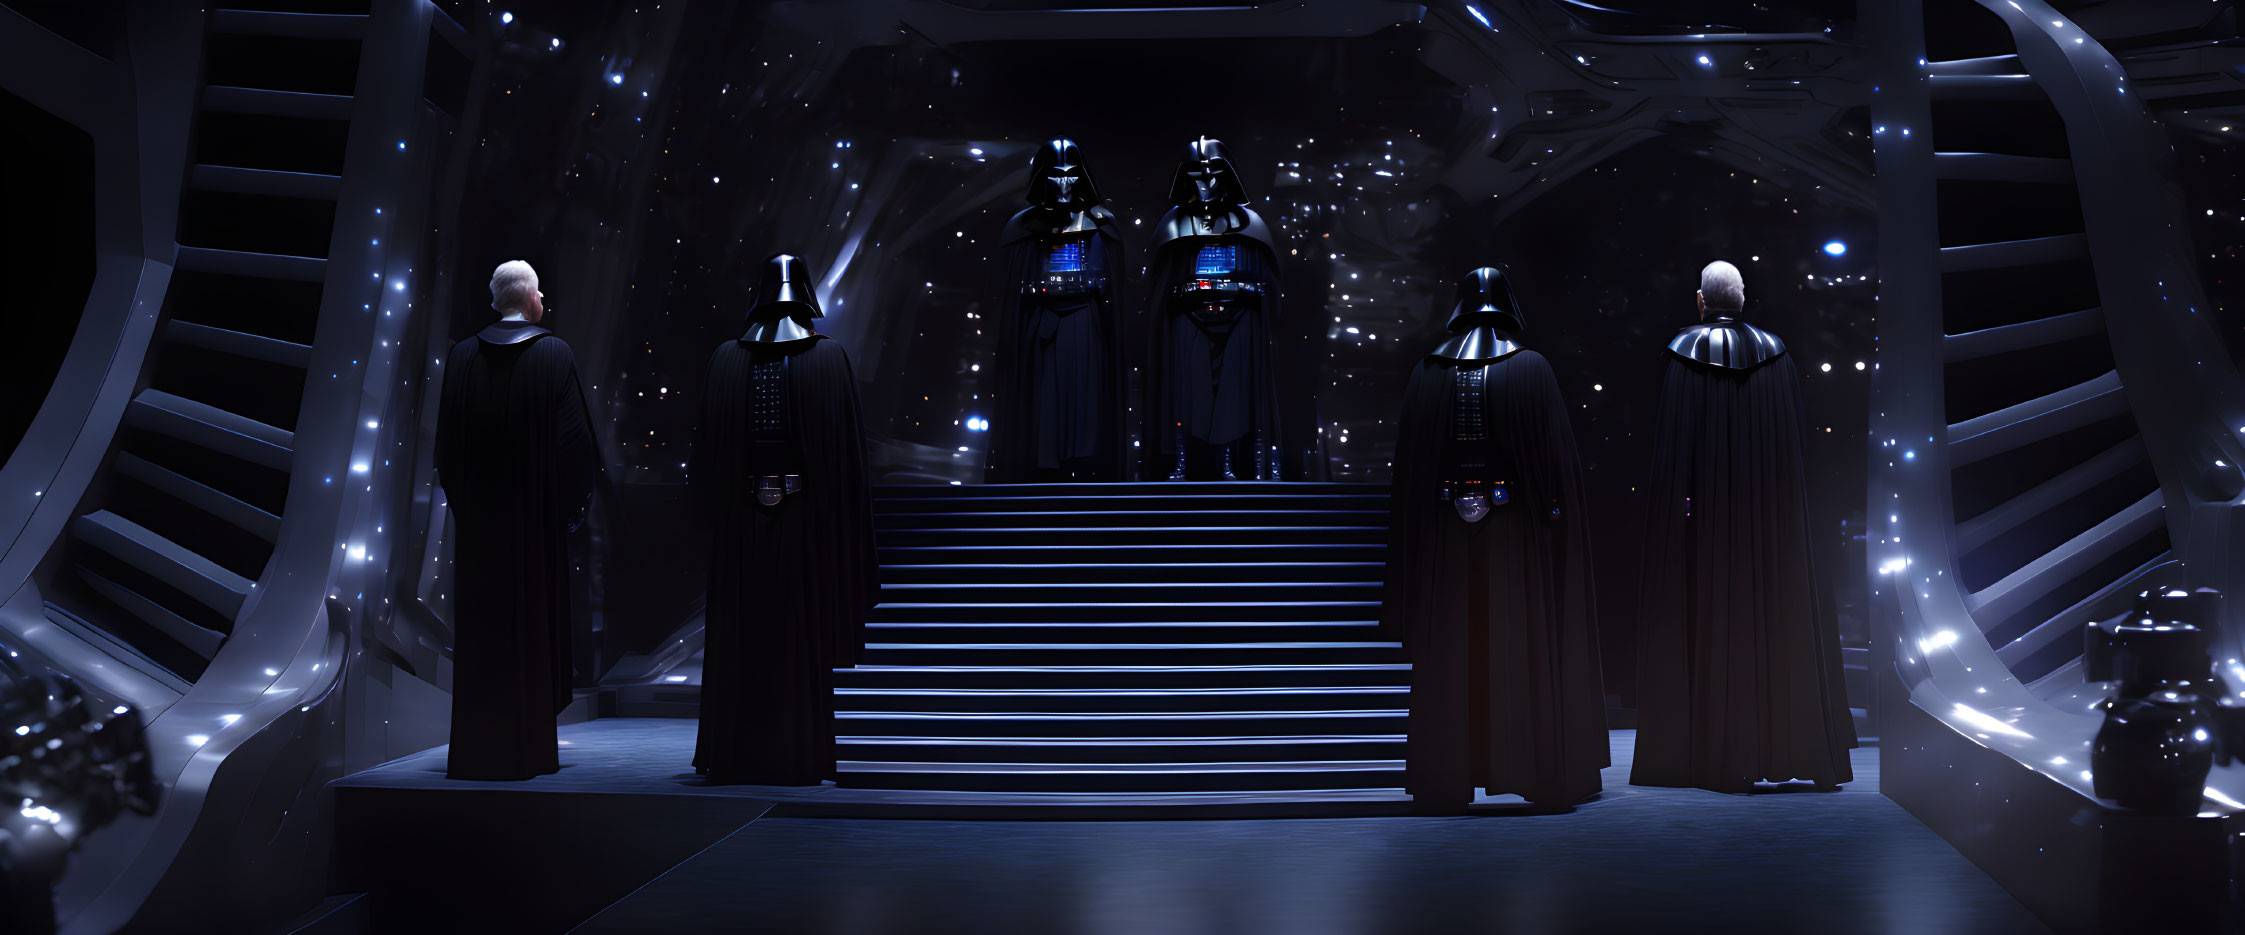 Emperor Palpatine and Darth Vader?